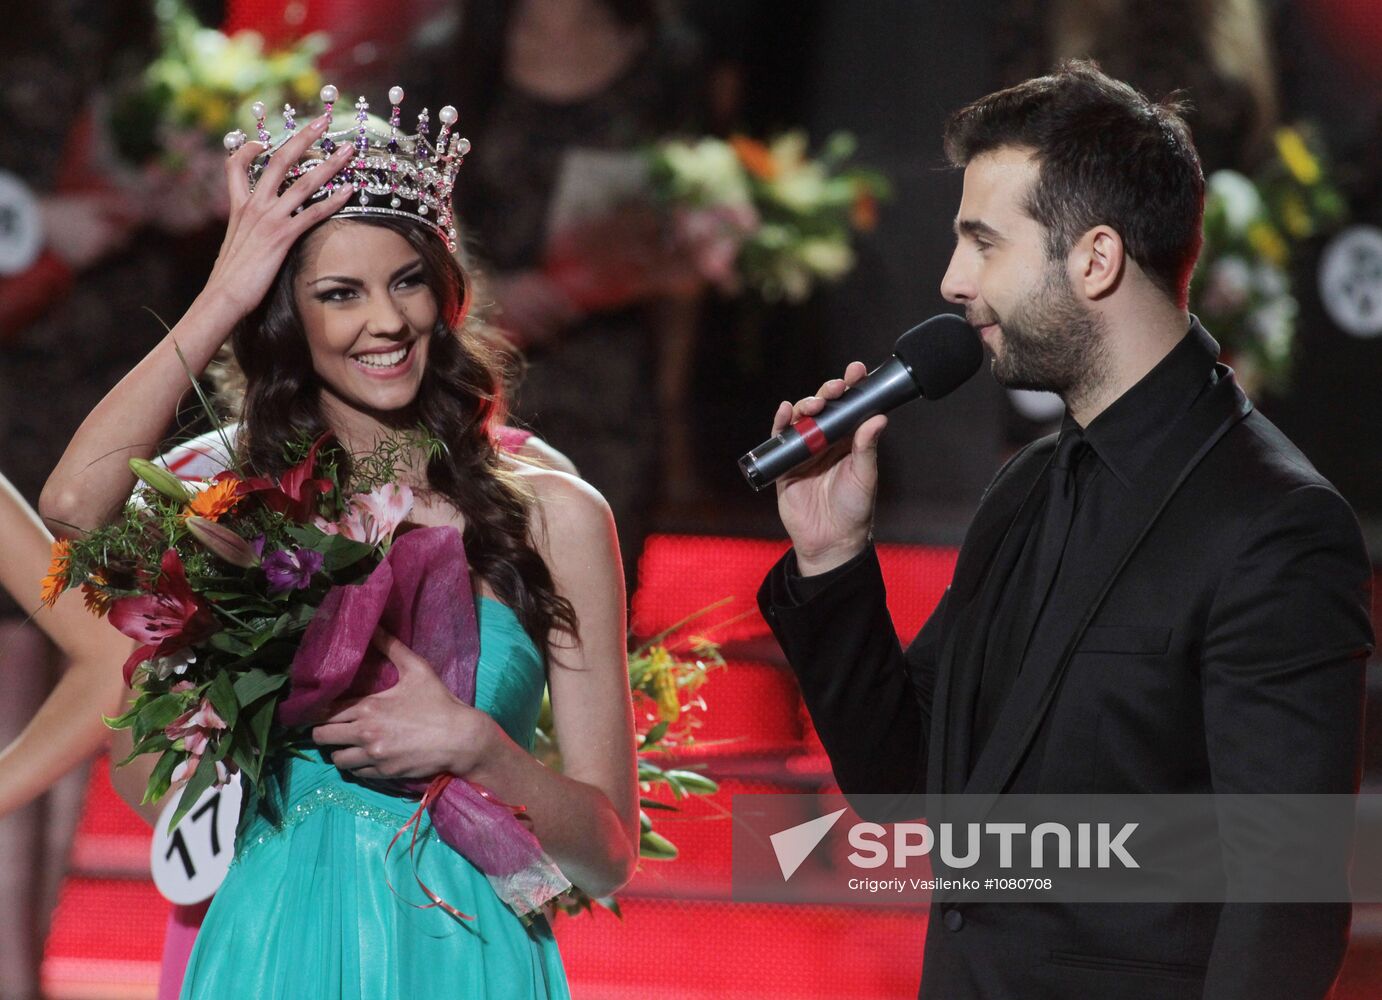 Finals of Miss Ukraine 2012 beauty pageant